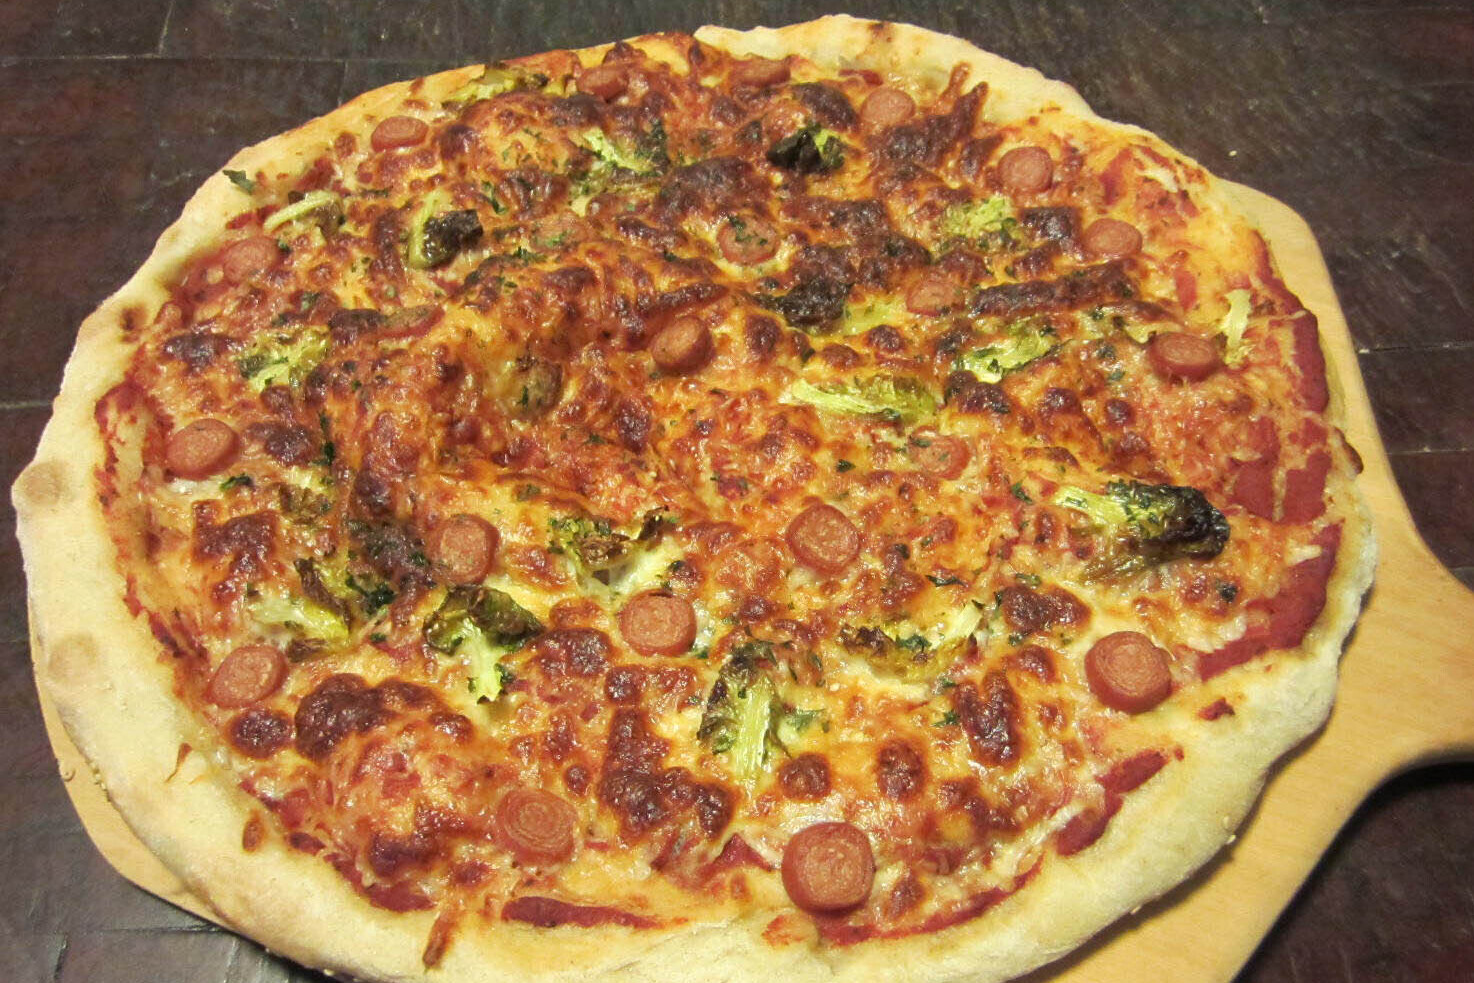 A whole pepperoni and broccoli pizza